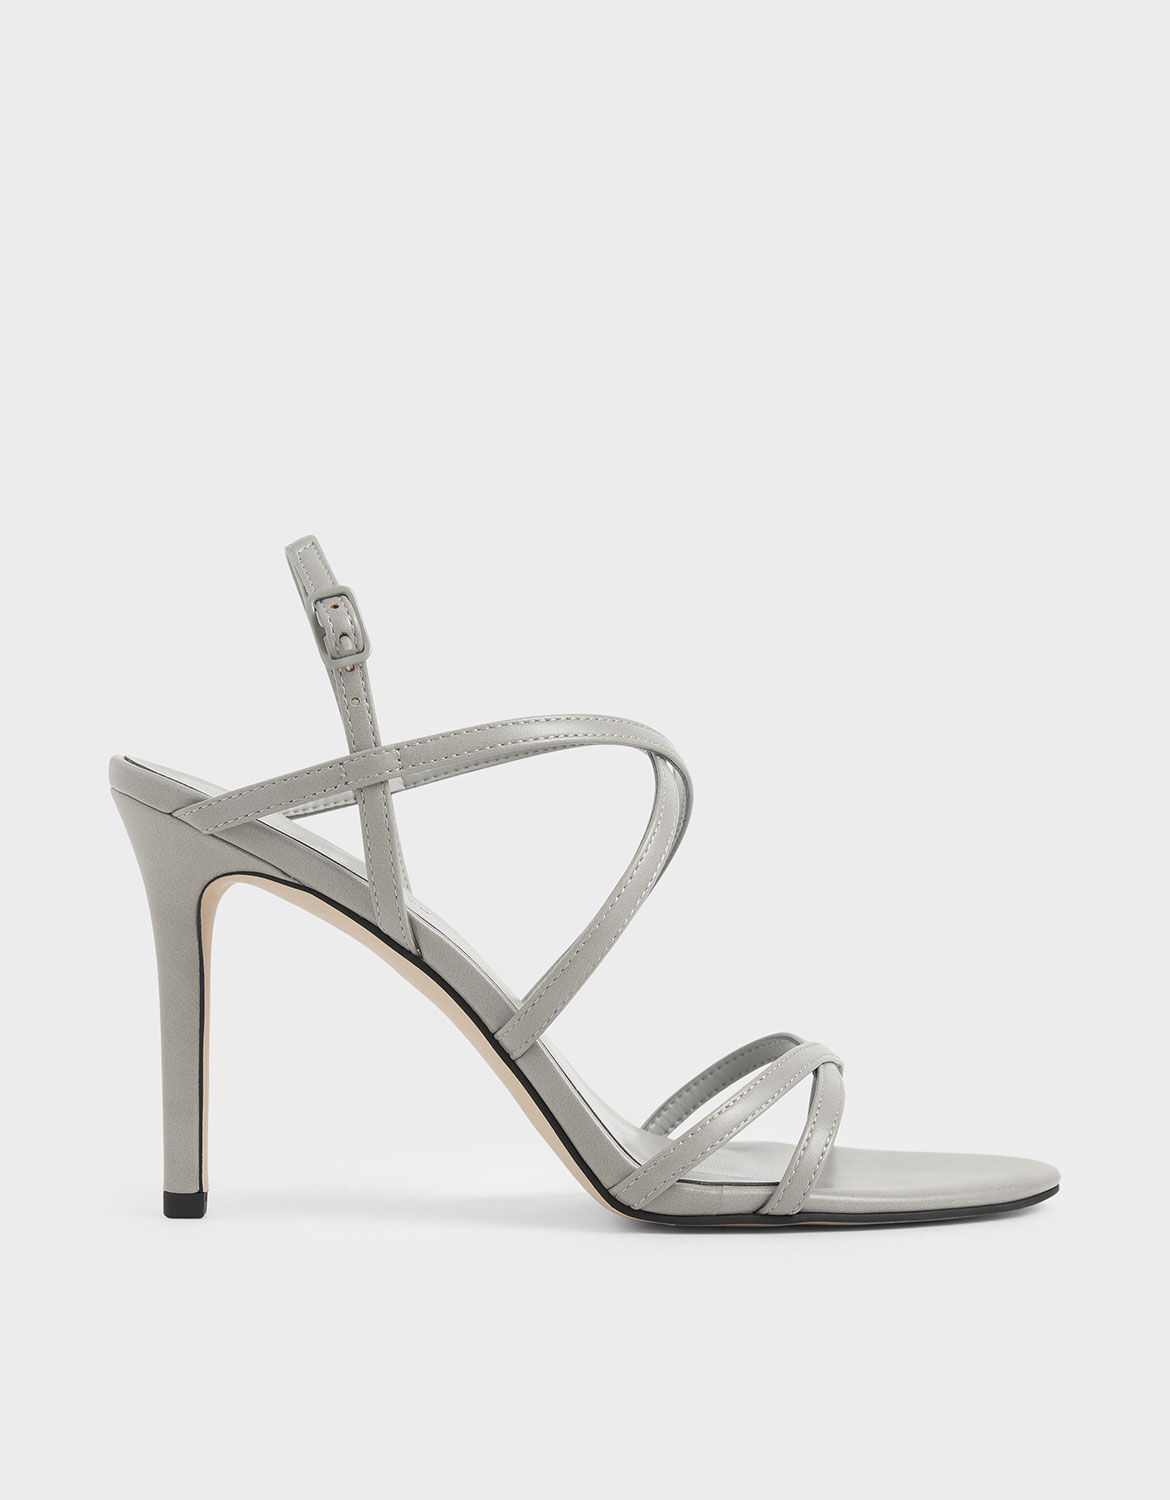 strappy grey heels